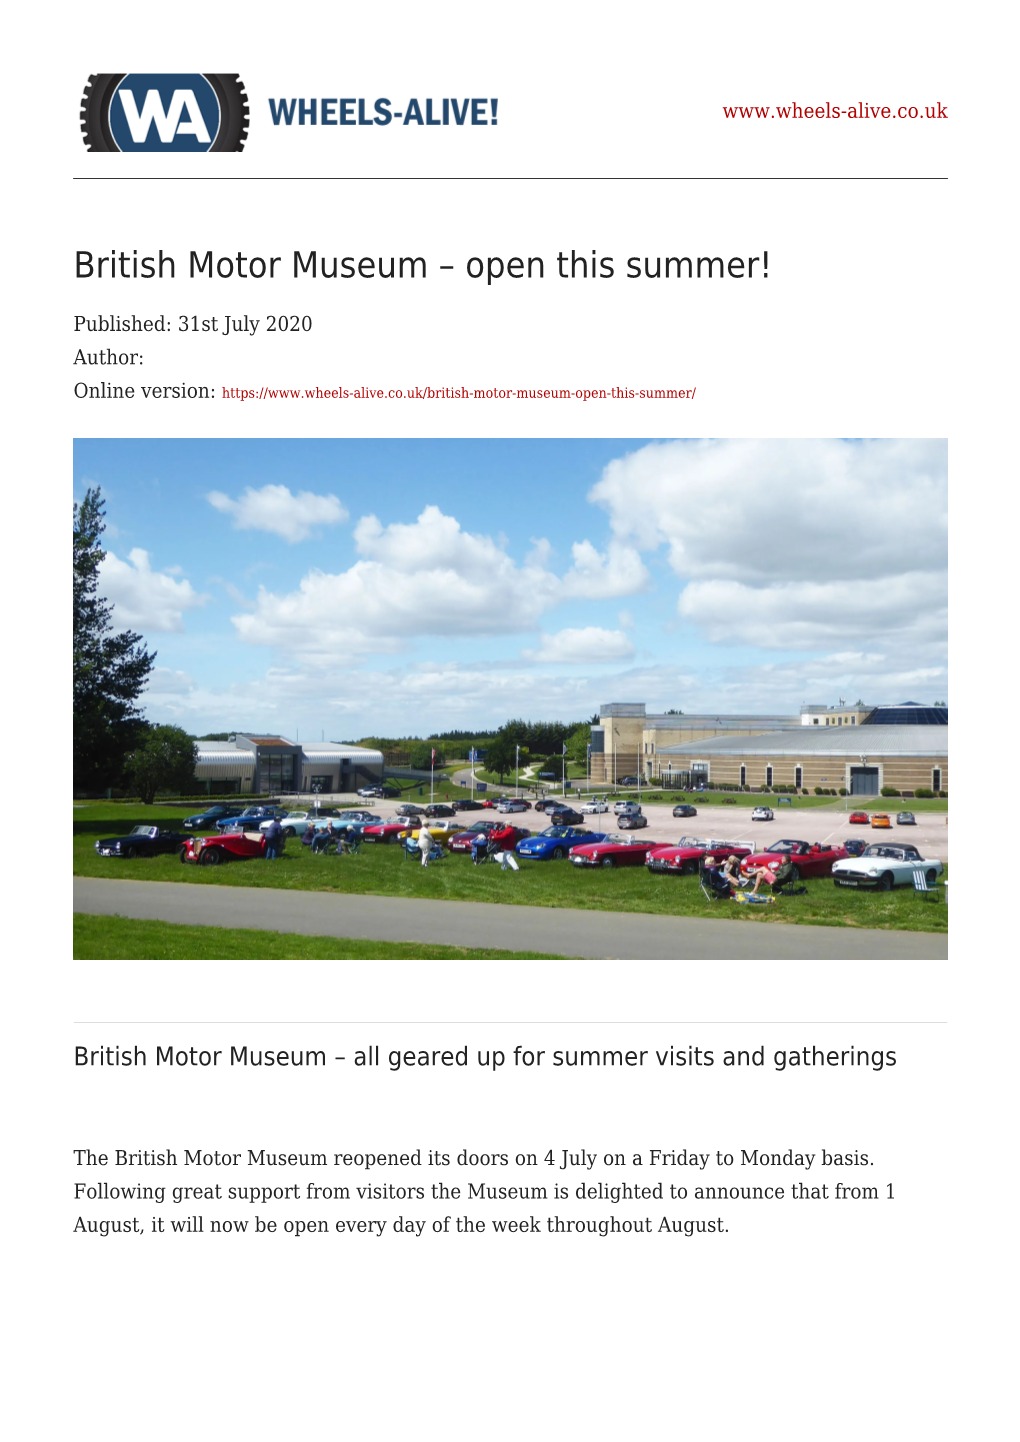 British Motor Museum – Open This Summer!